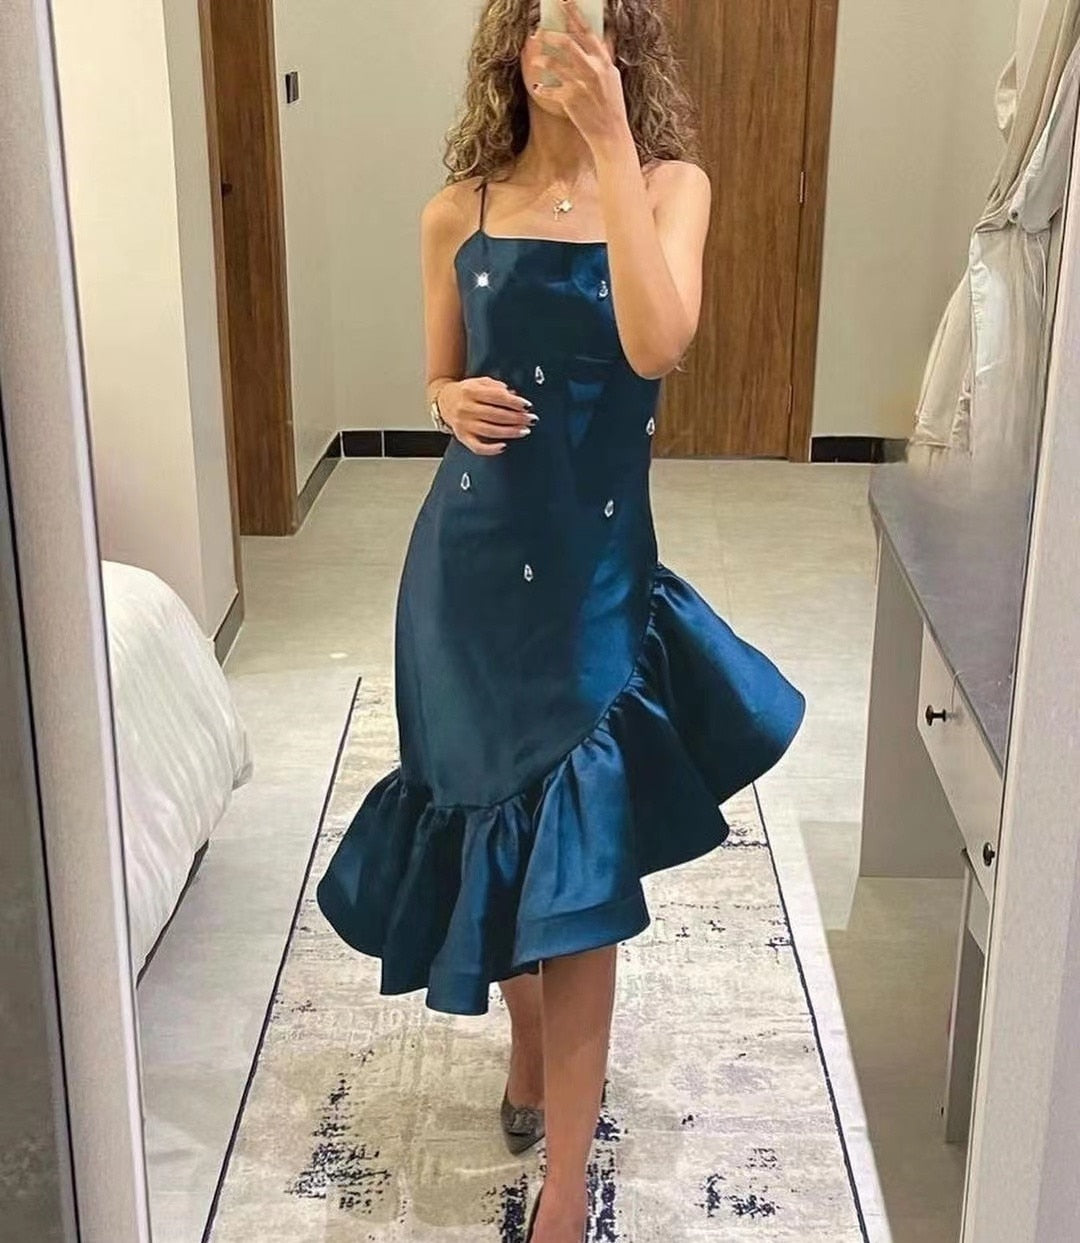 Lizakosht Short Prom Dresses Spaghetti Straps Rhinestone Bodice Cocktail Party Gowns Sleeveless Night Club Girls' Wear Dress